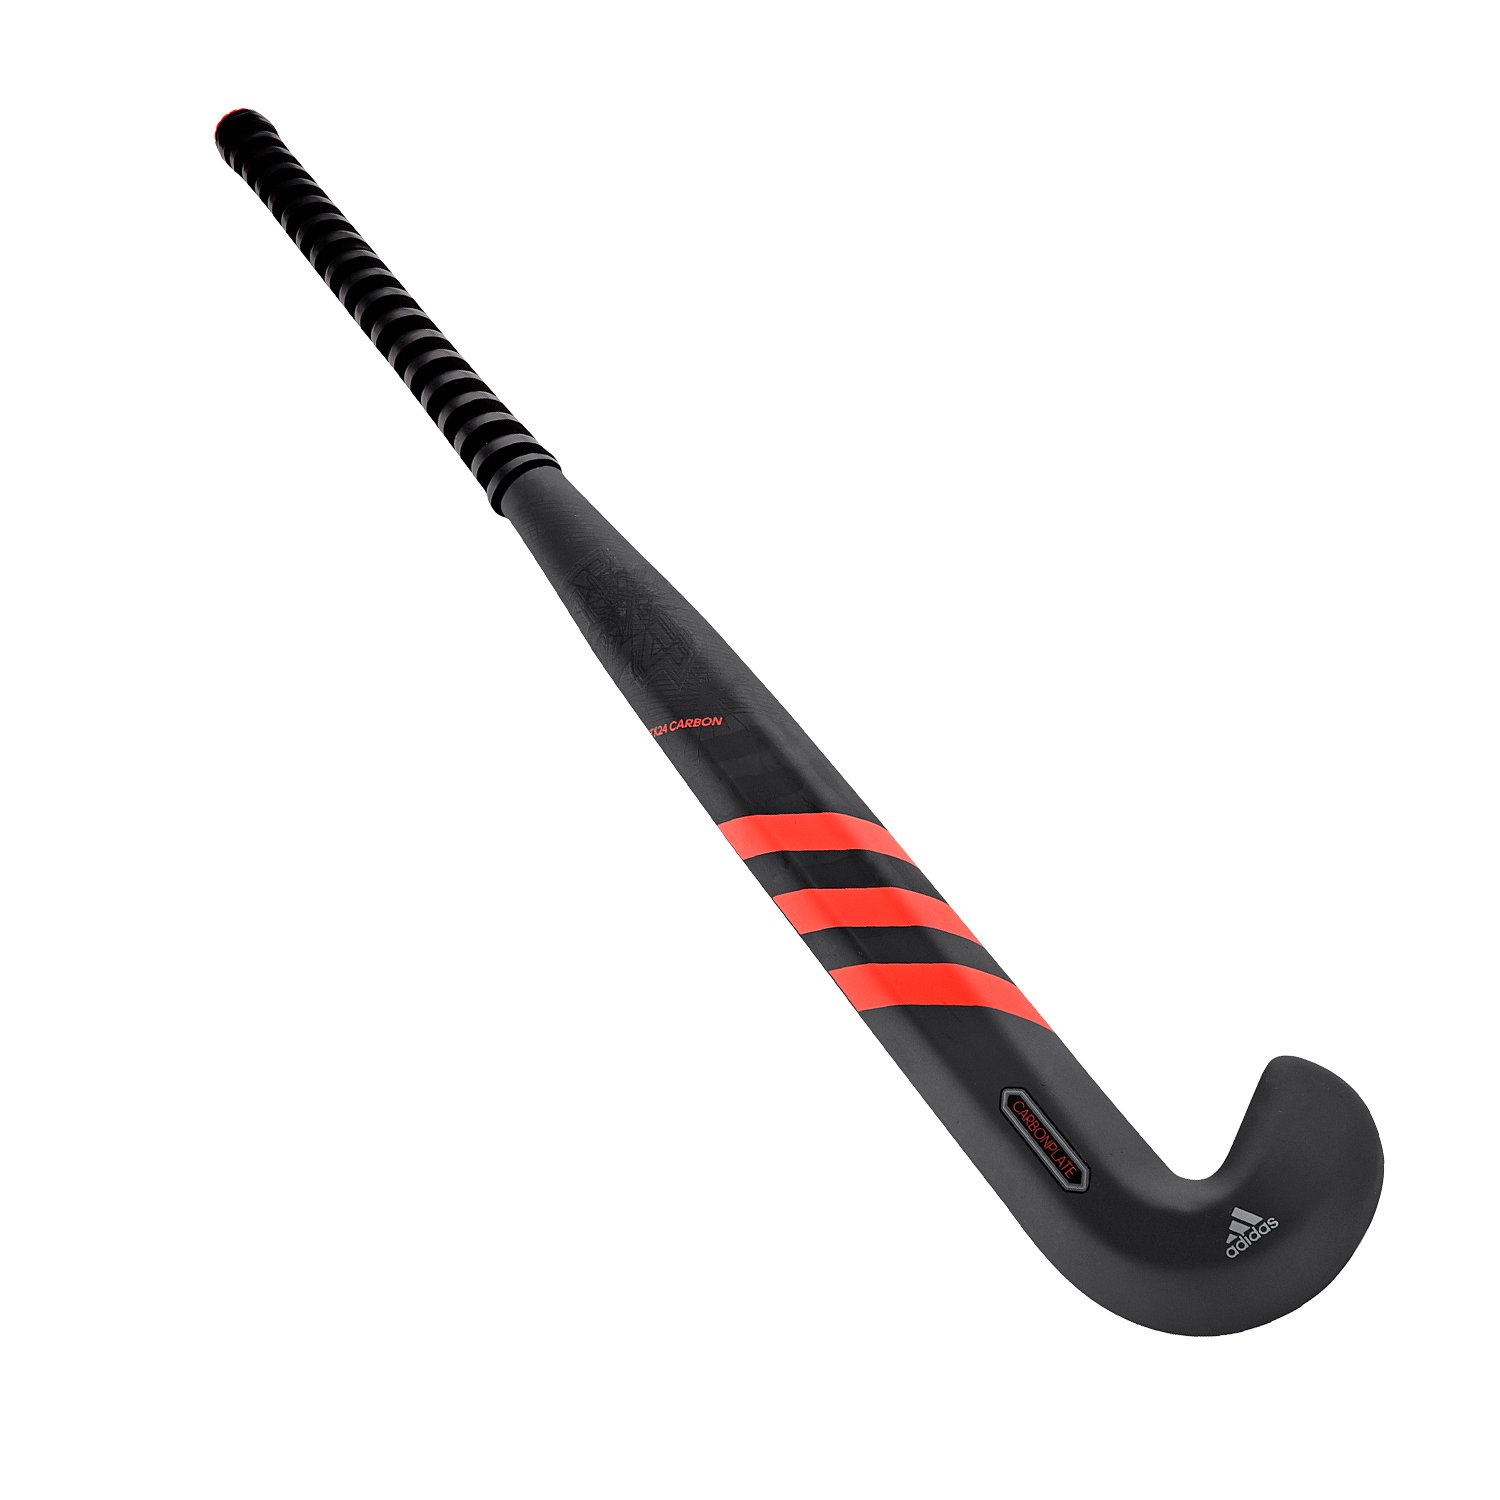 Cinemática ola impermeable TX24 Carbon Stick (19) - Hockey Sticks | Just Hockey - Adidas 2019